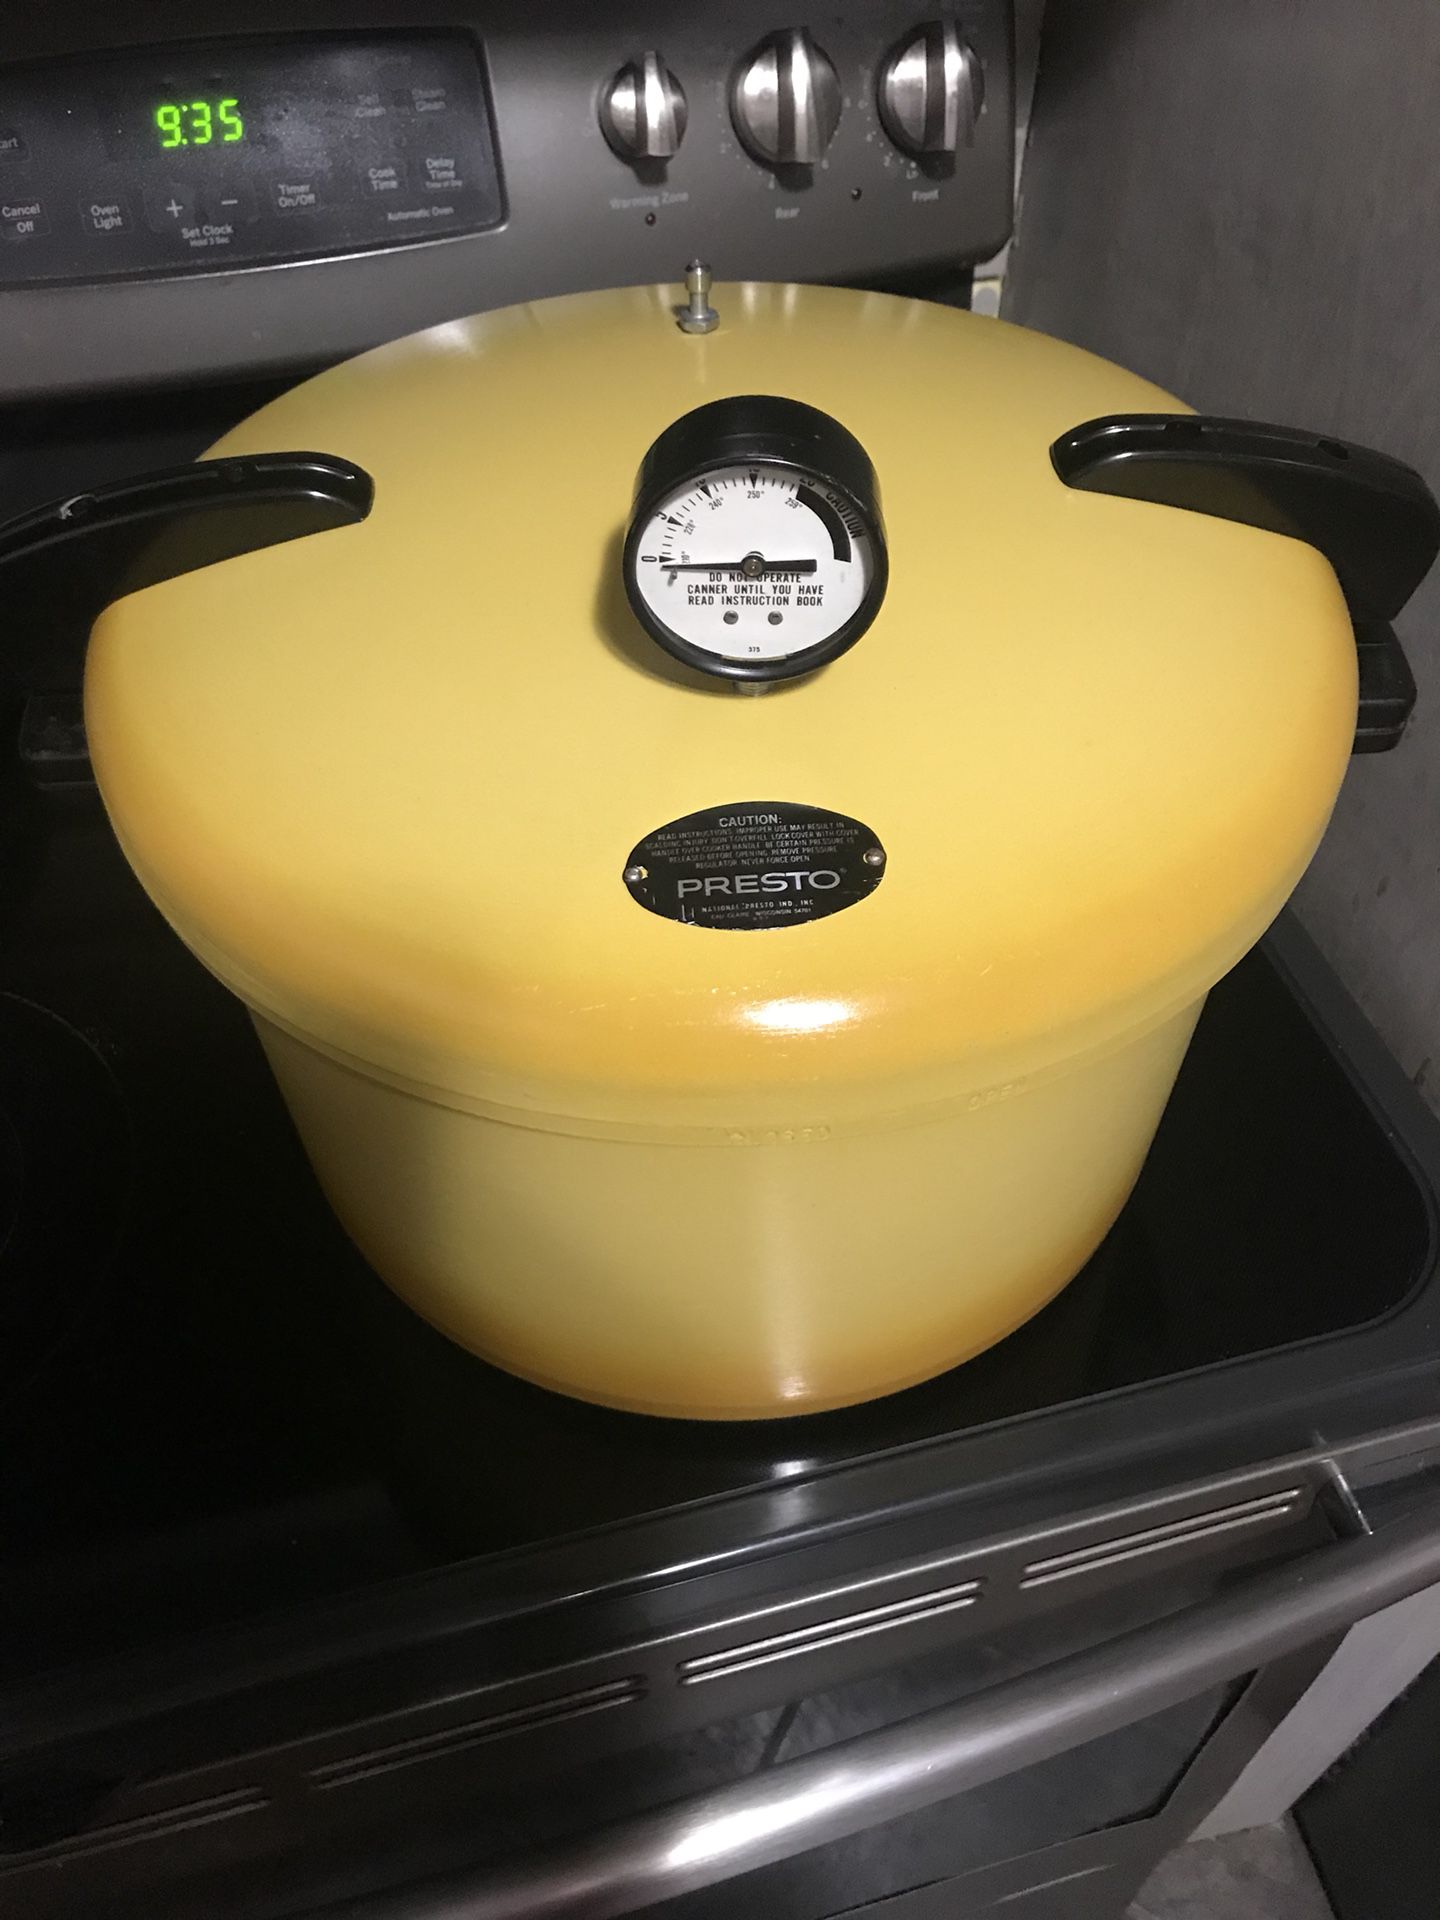 Presto 12 Qt Pressure Cooker Canner Model 01/CAA12H Yellow Harvest Gold  Vintage